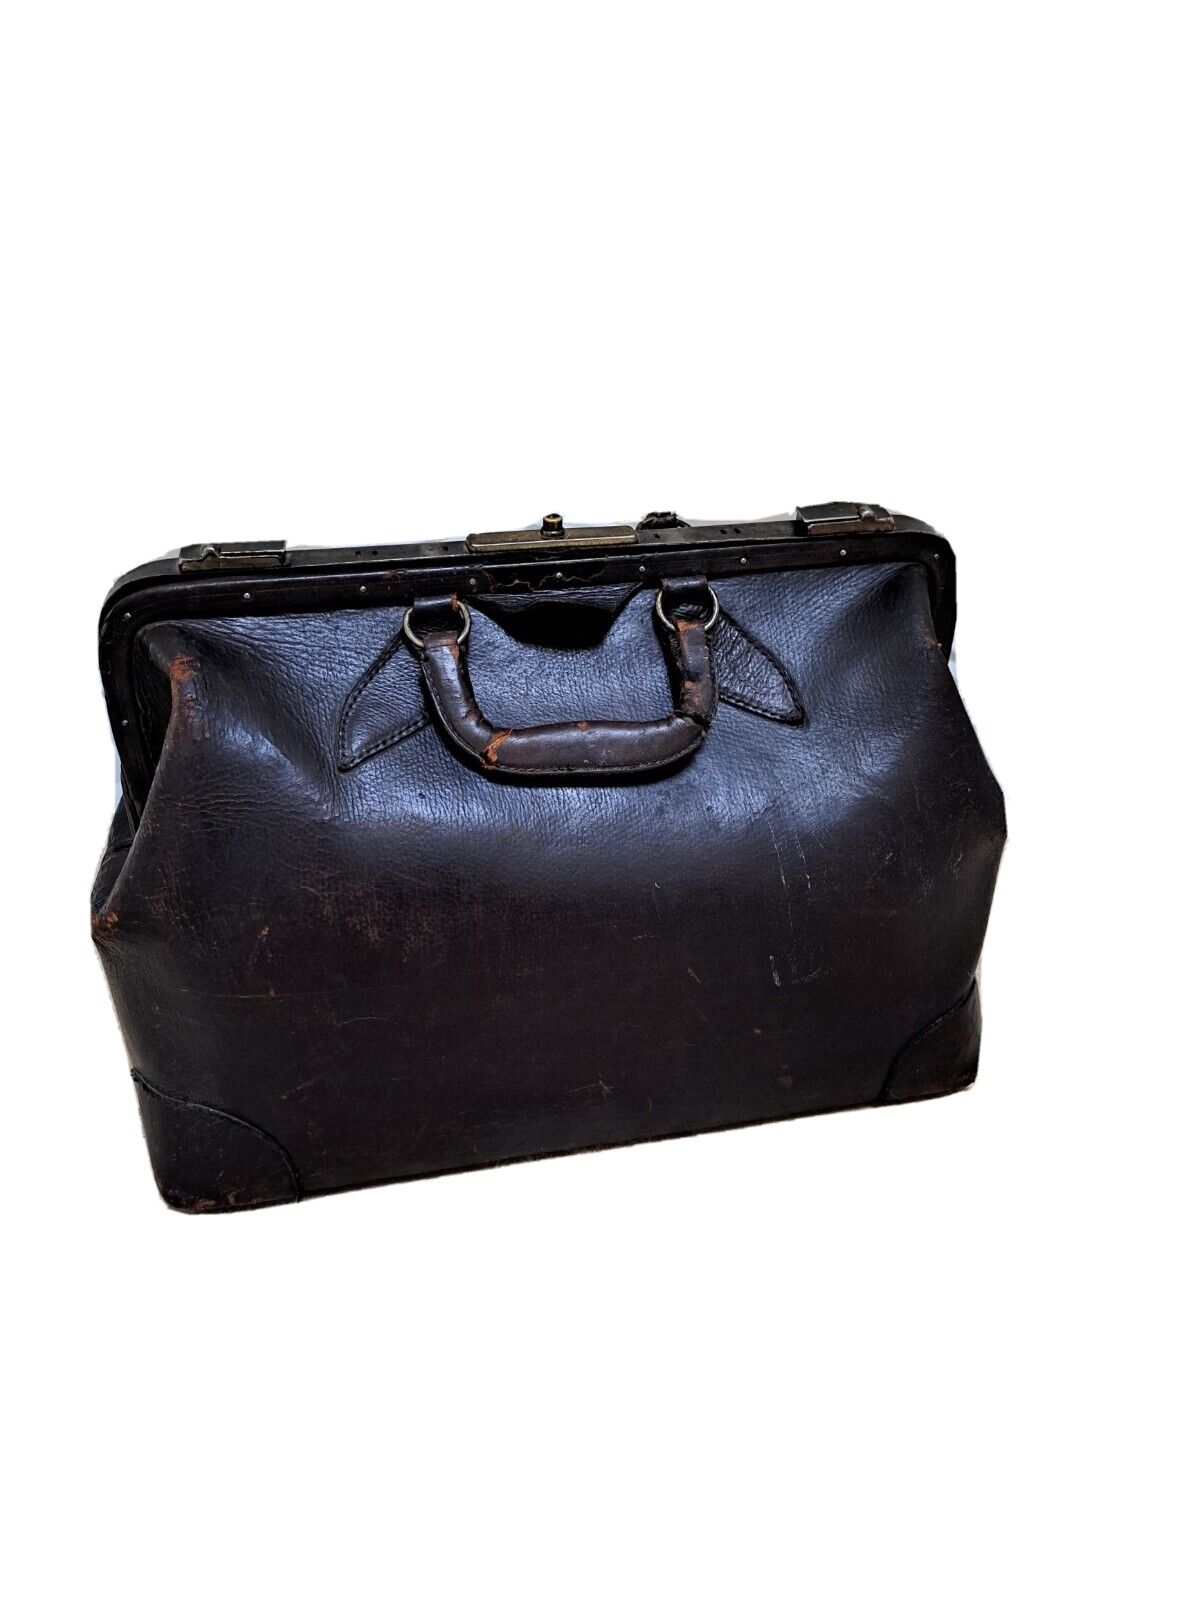 Antique Leather & Metal Large Doctor's Bag Case Medical Needs Restoring Theater